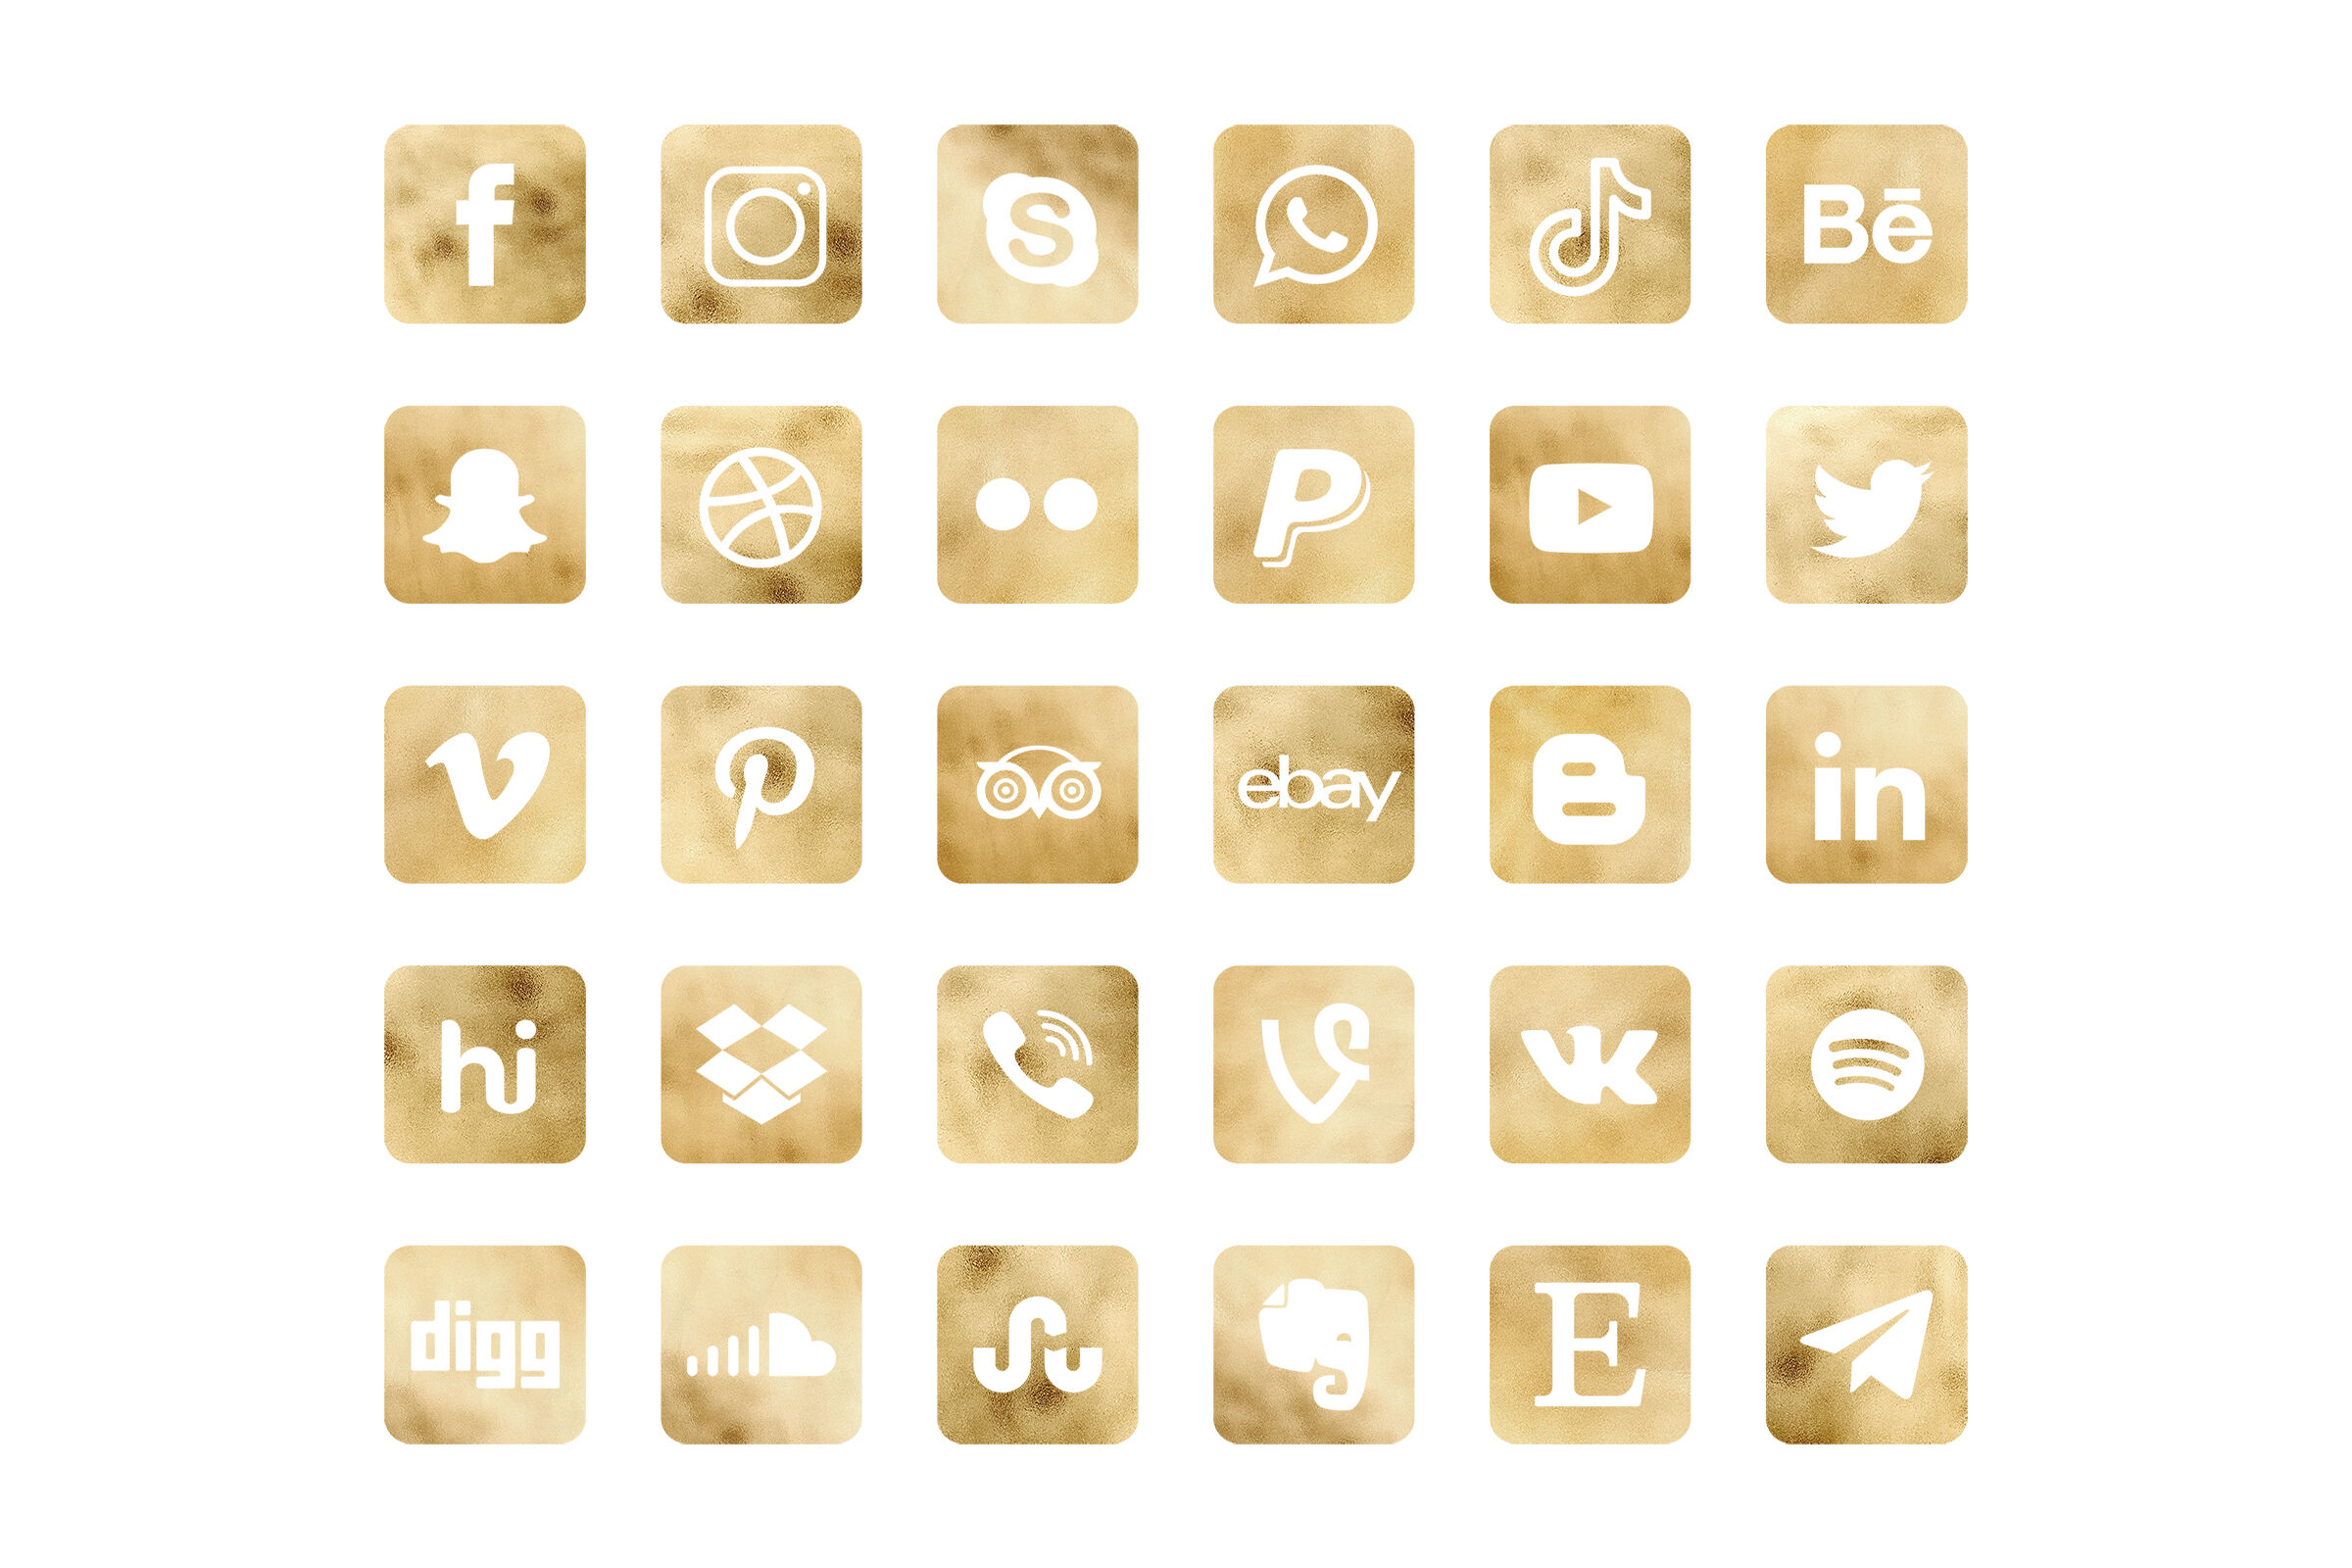 Square Gold Social Media Icons By North Sea Studio